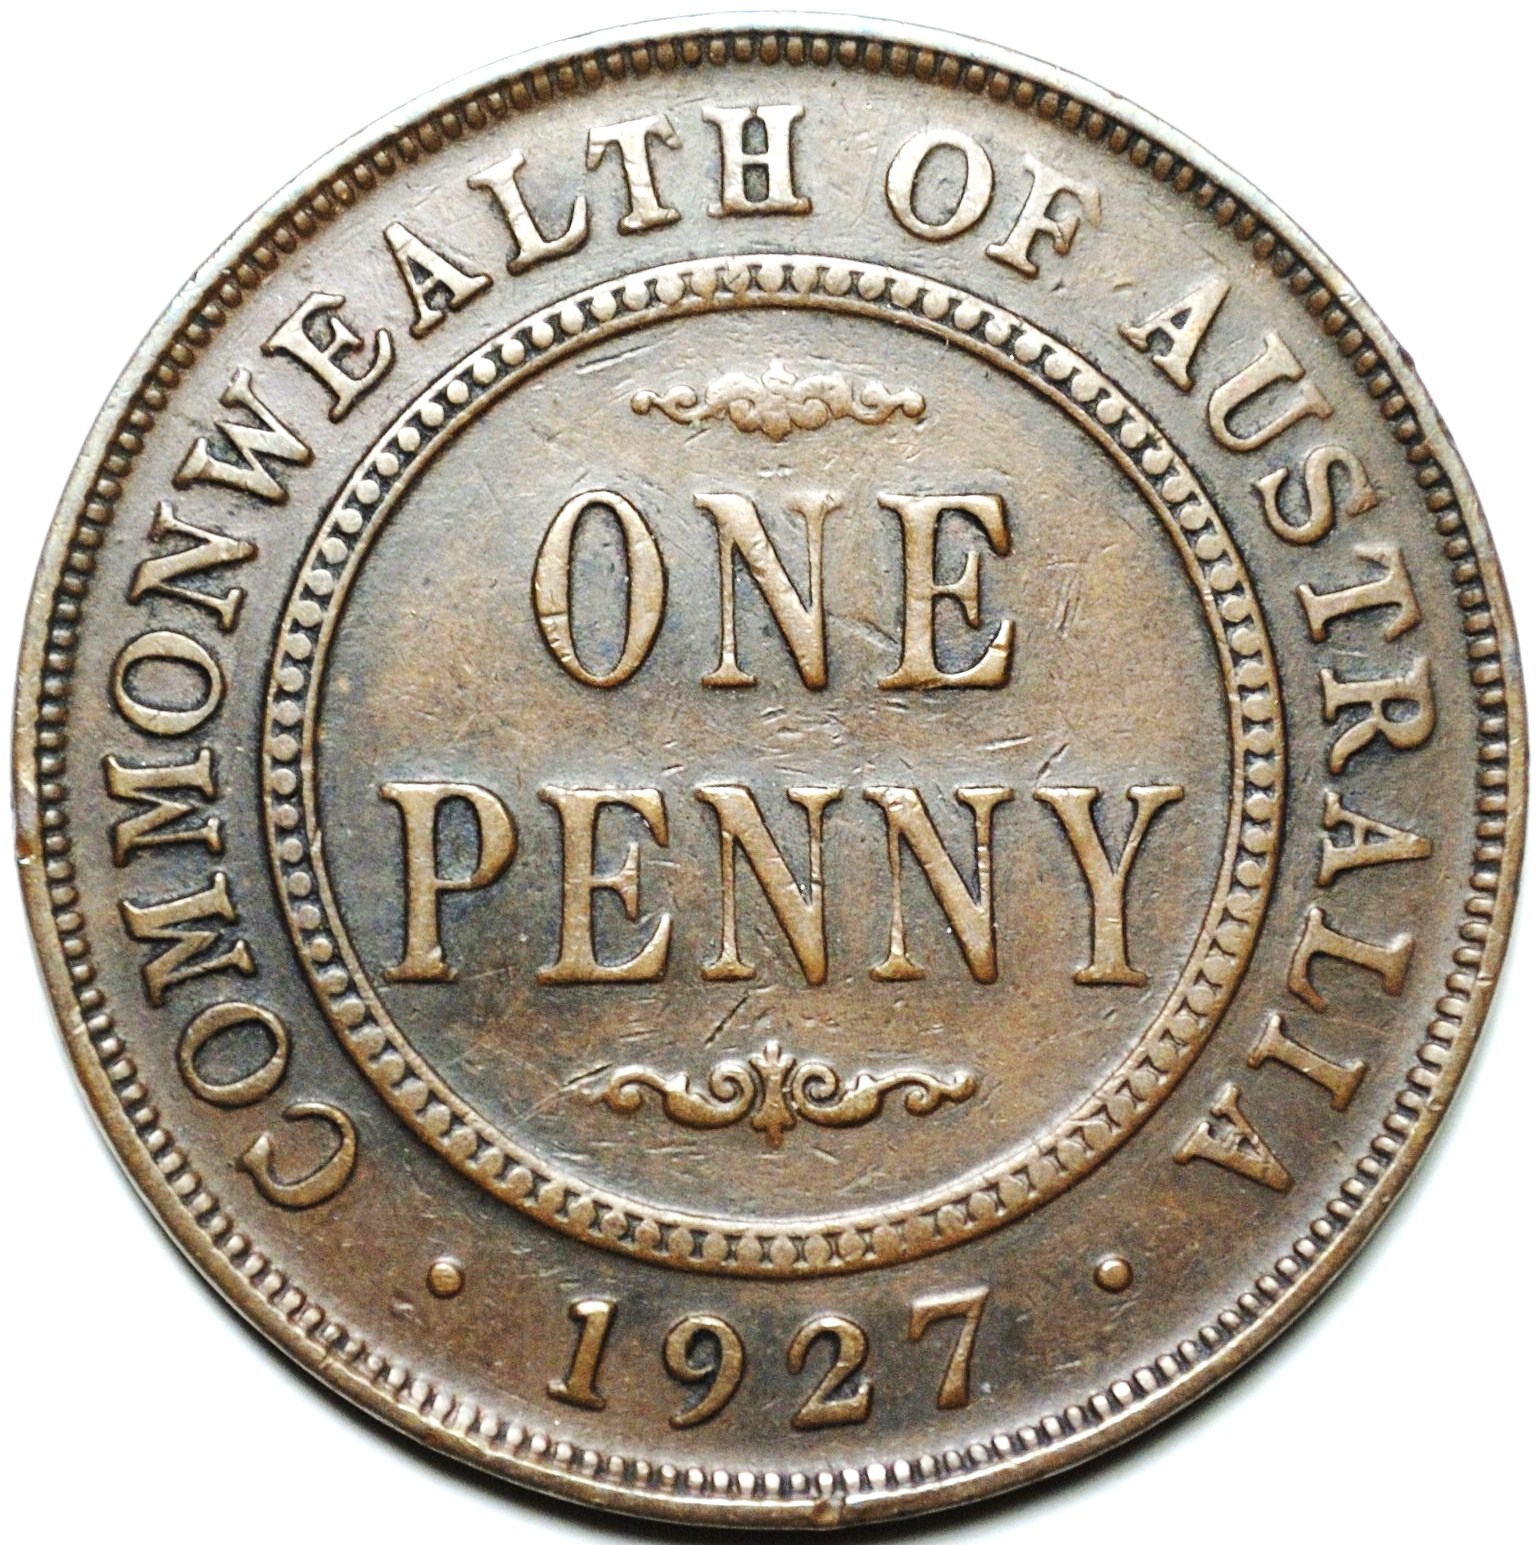 1927 Australian penny, Indian obverse variety, reverse